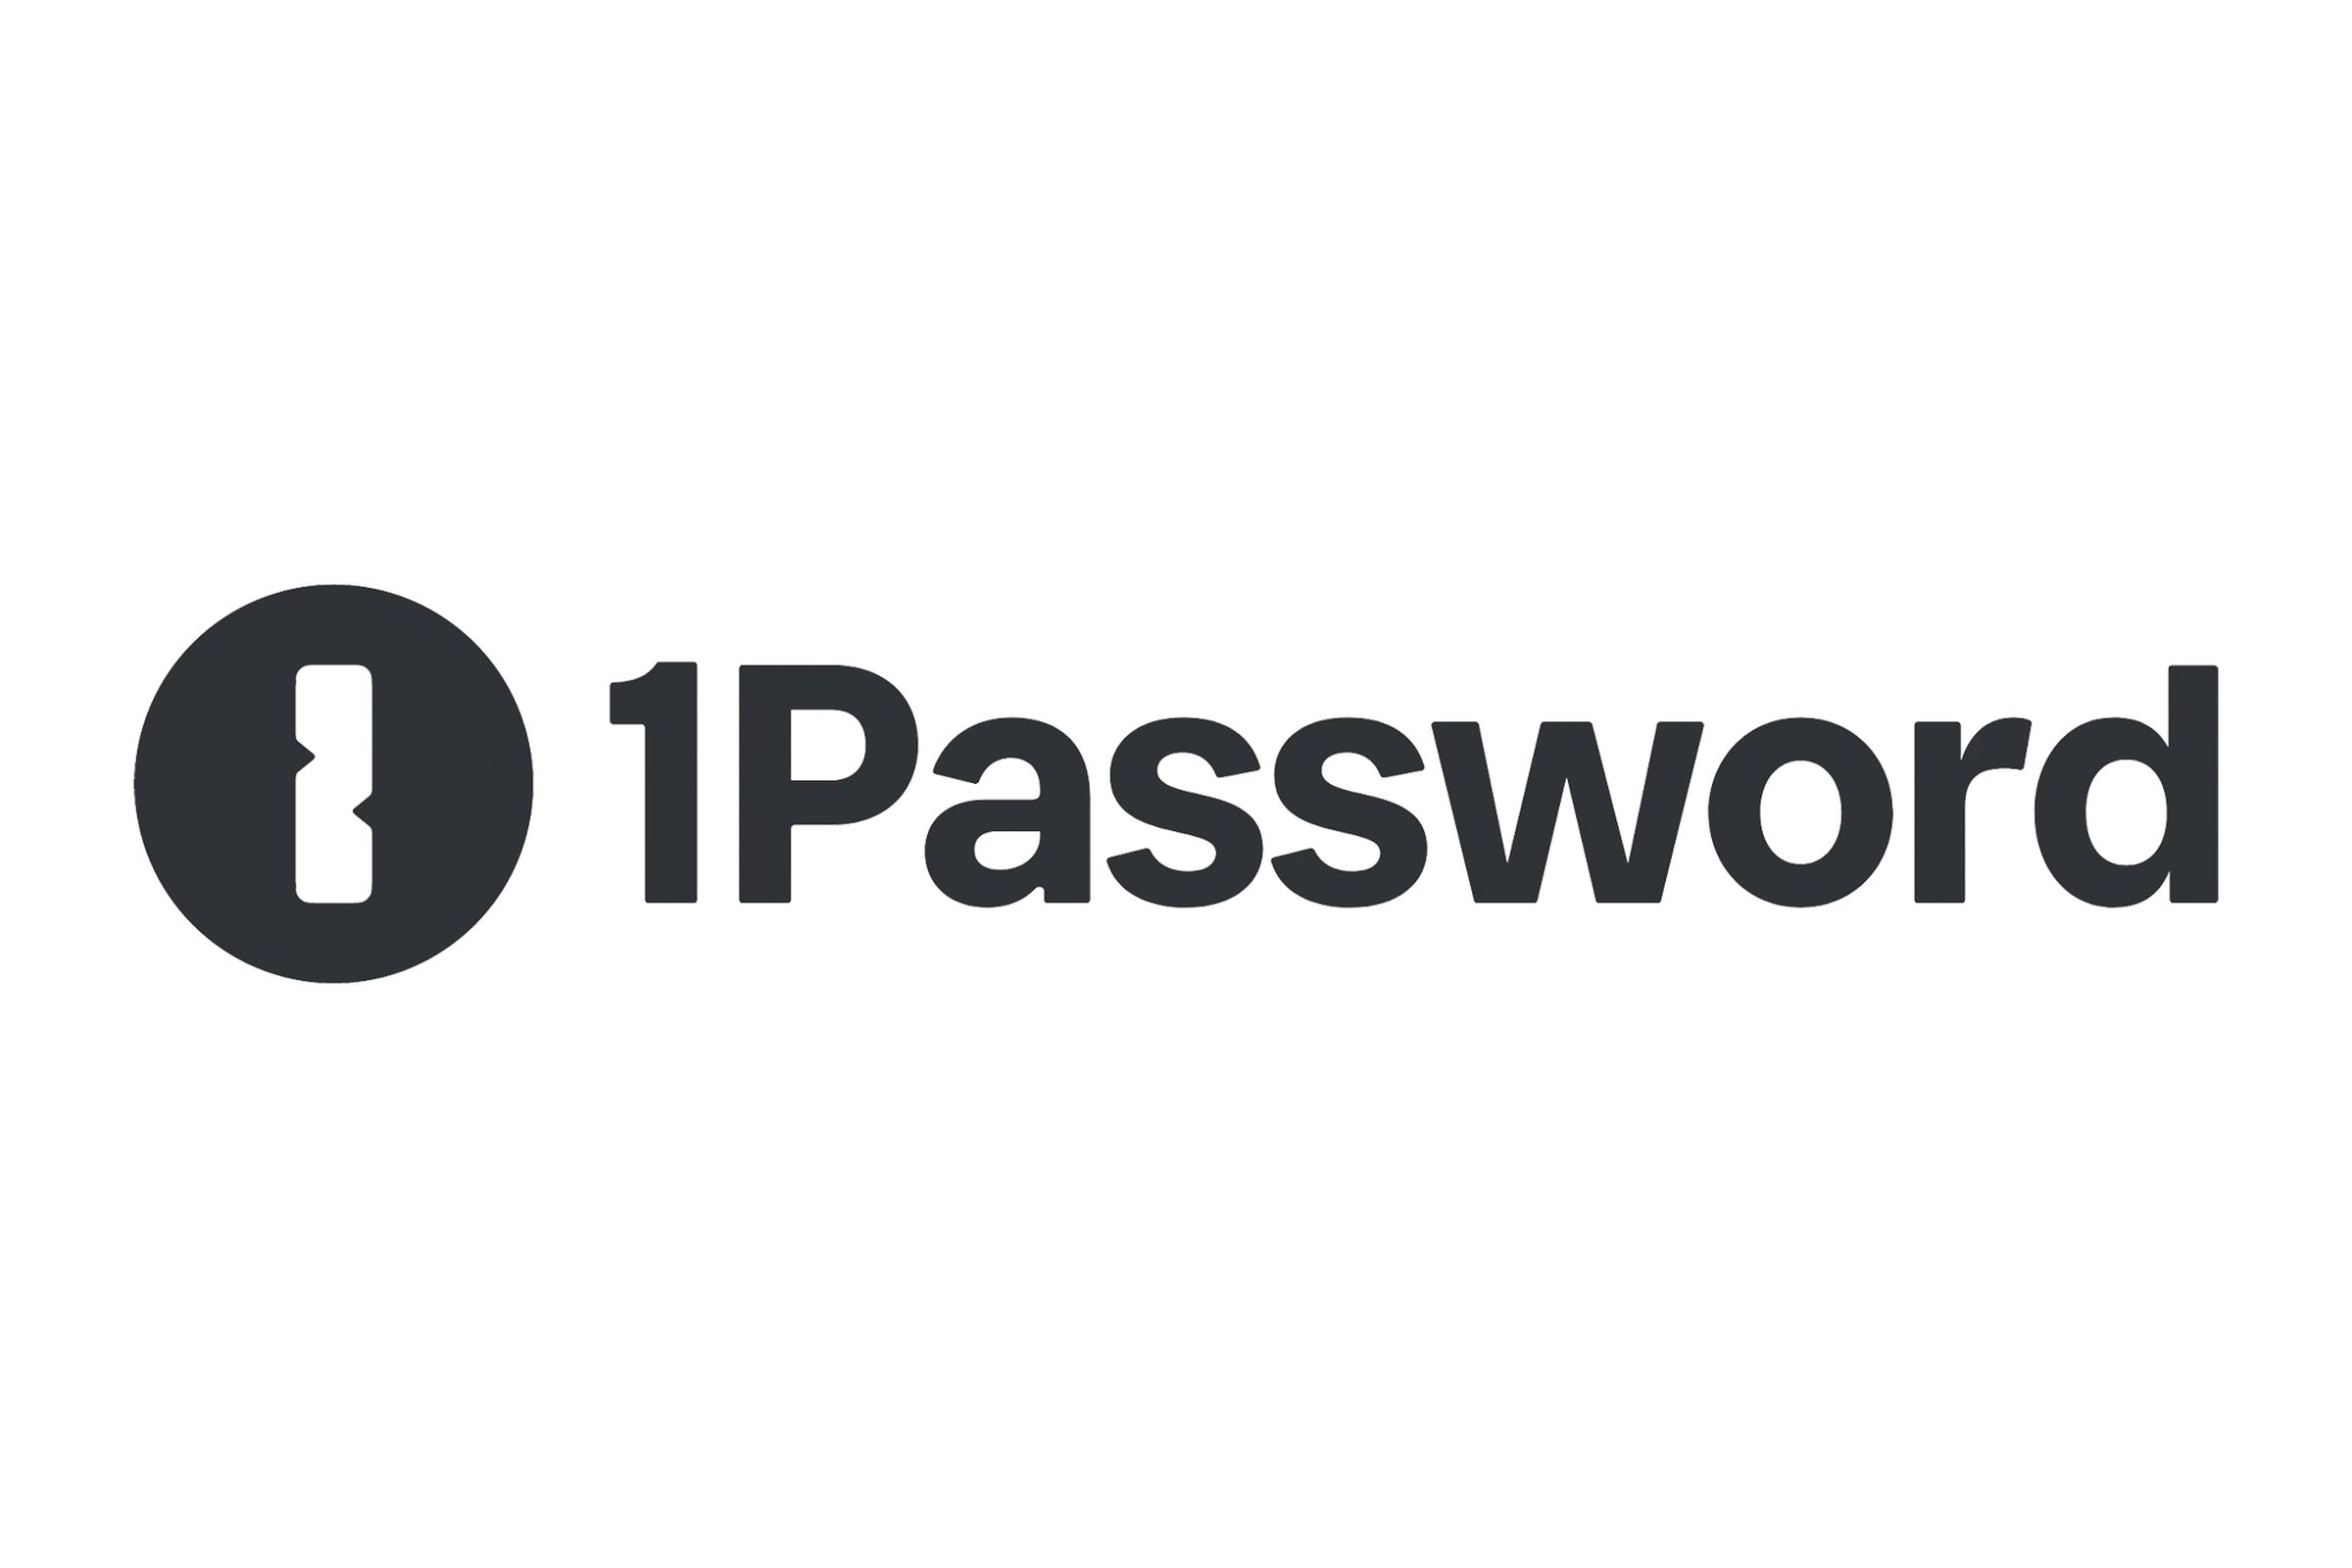 The 1Password logo on a white background.